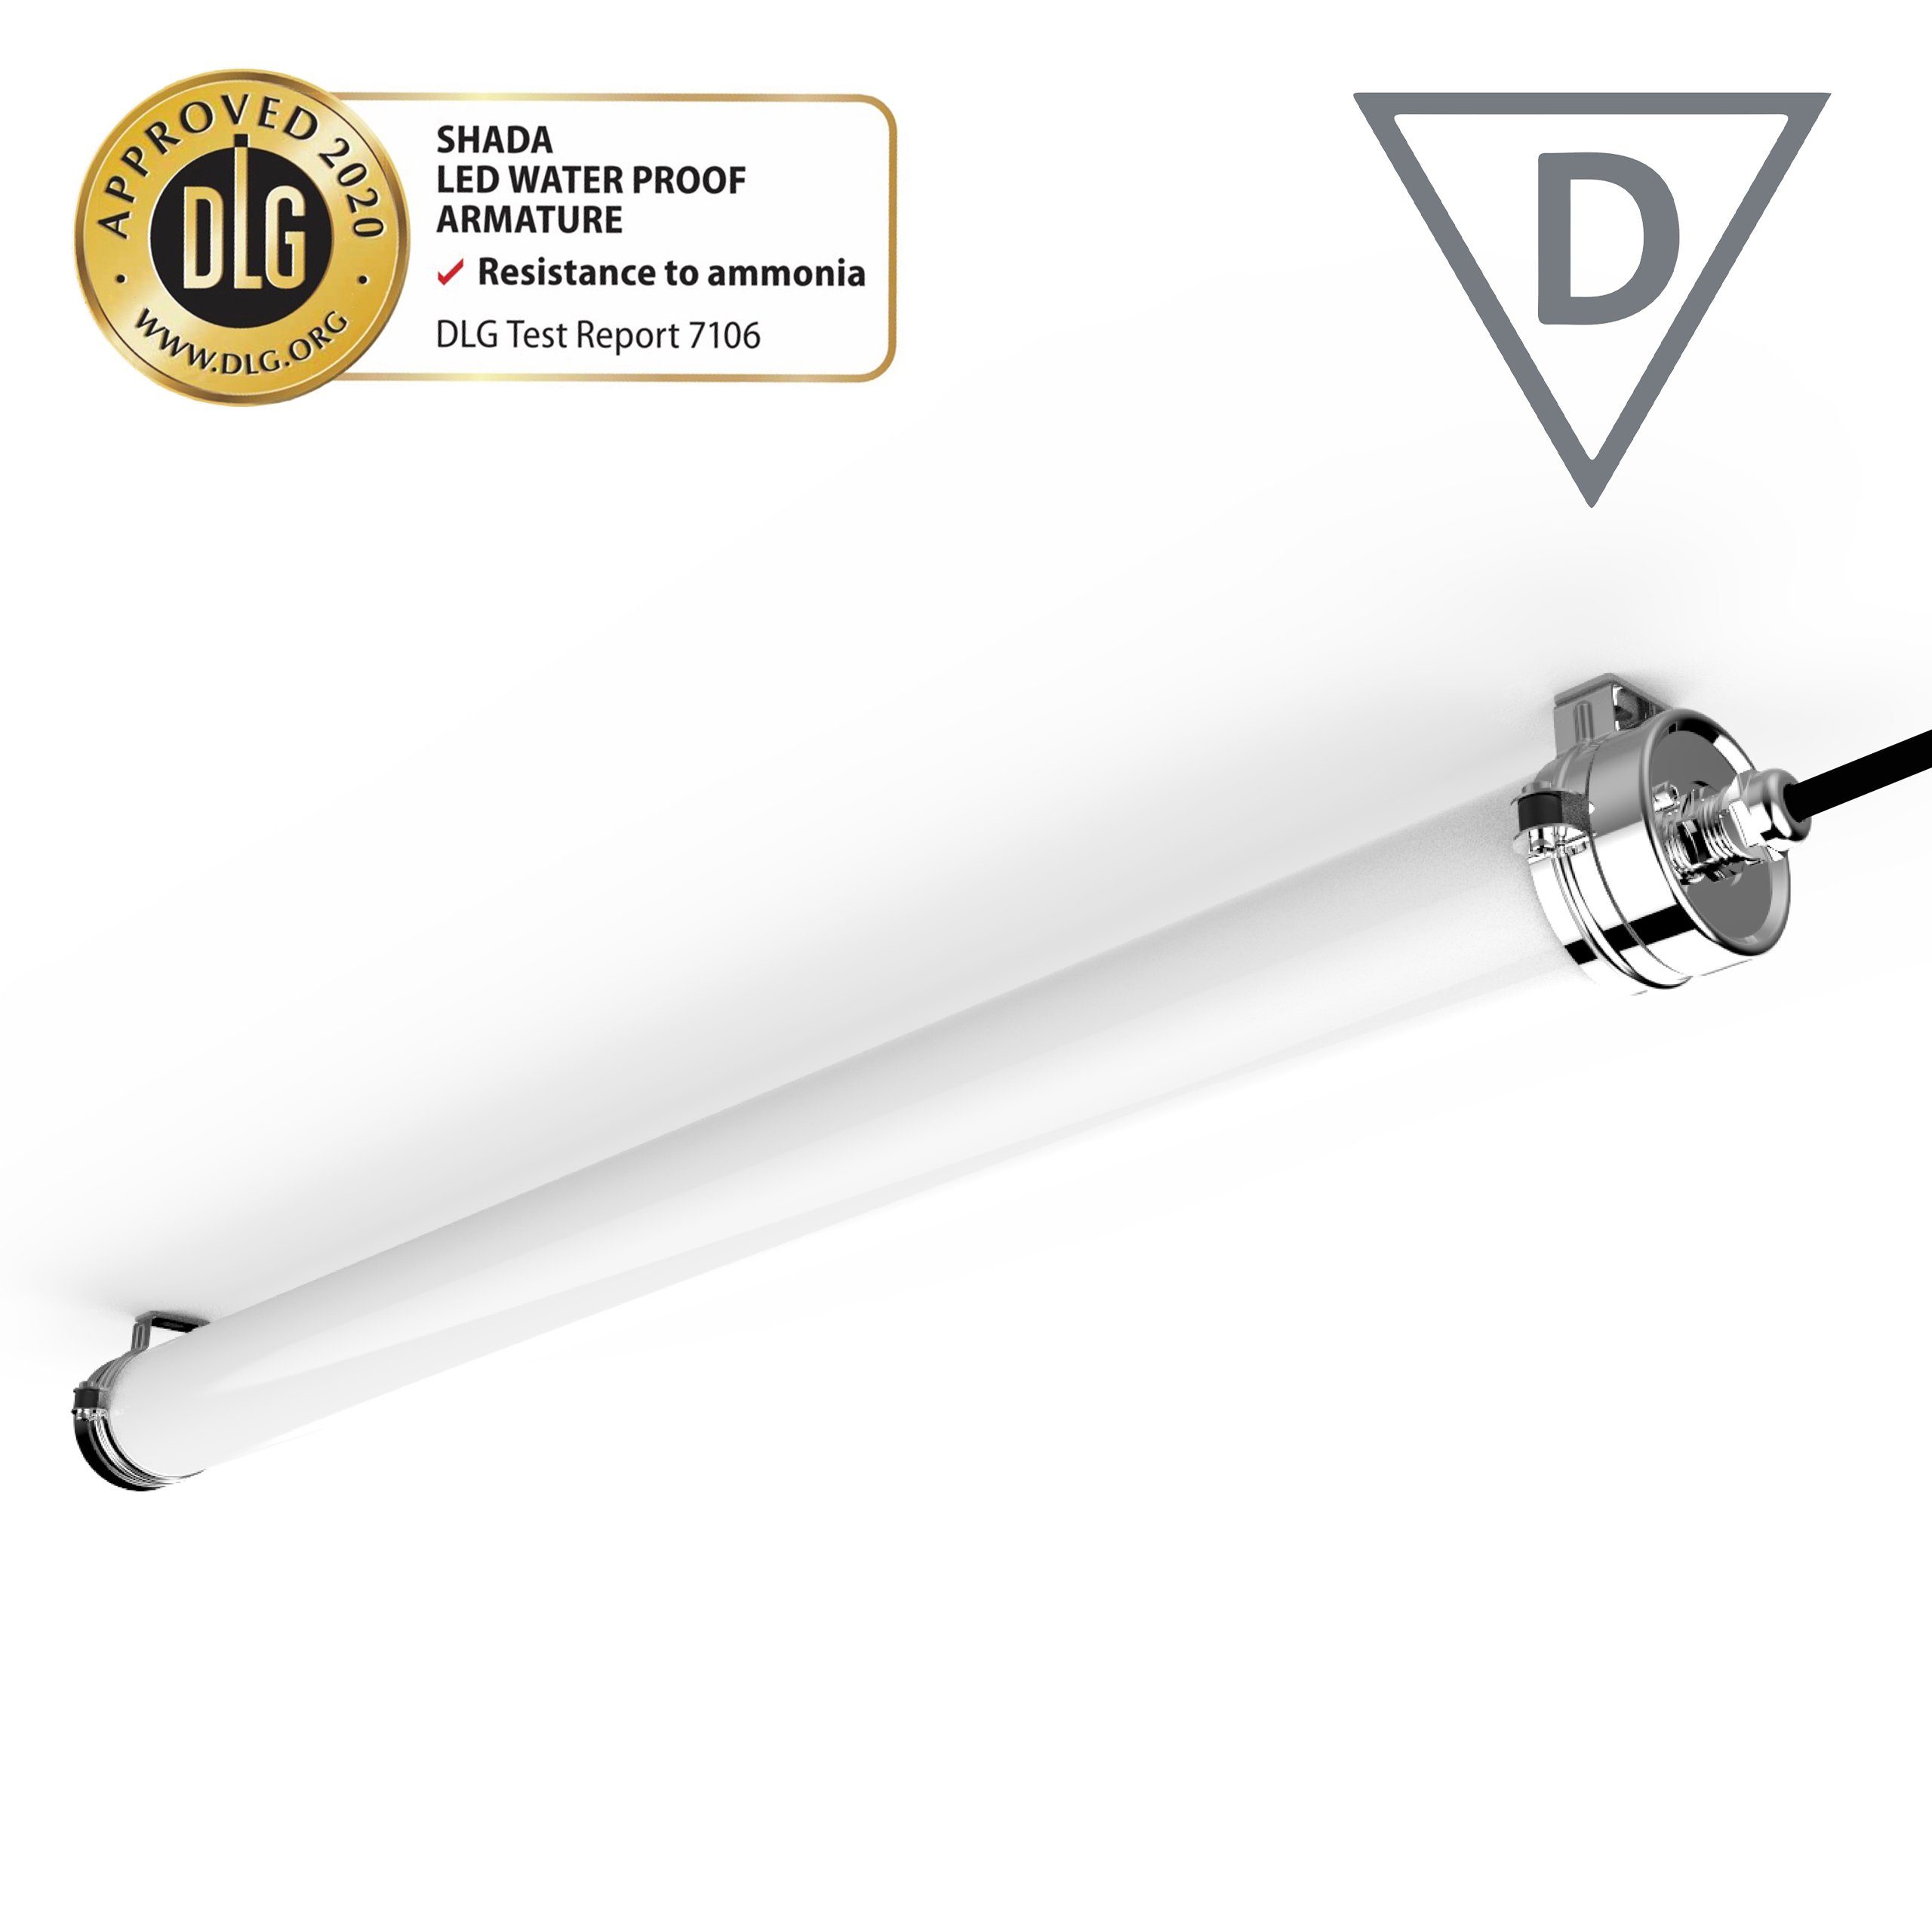 LED's light PRO LED Pendelleuchte 150cm Ammoniakbeständig DLG-geprüft für 40W Tierhaltung IP69K 2400325 kaltweiß LED, LED-Röhrenleuchte